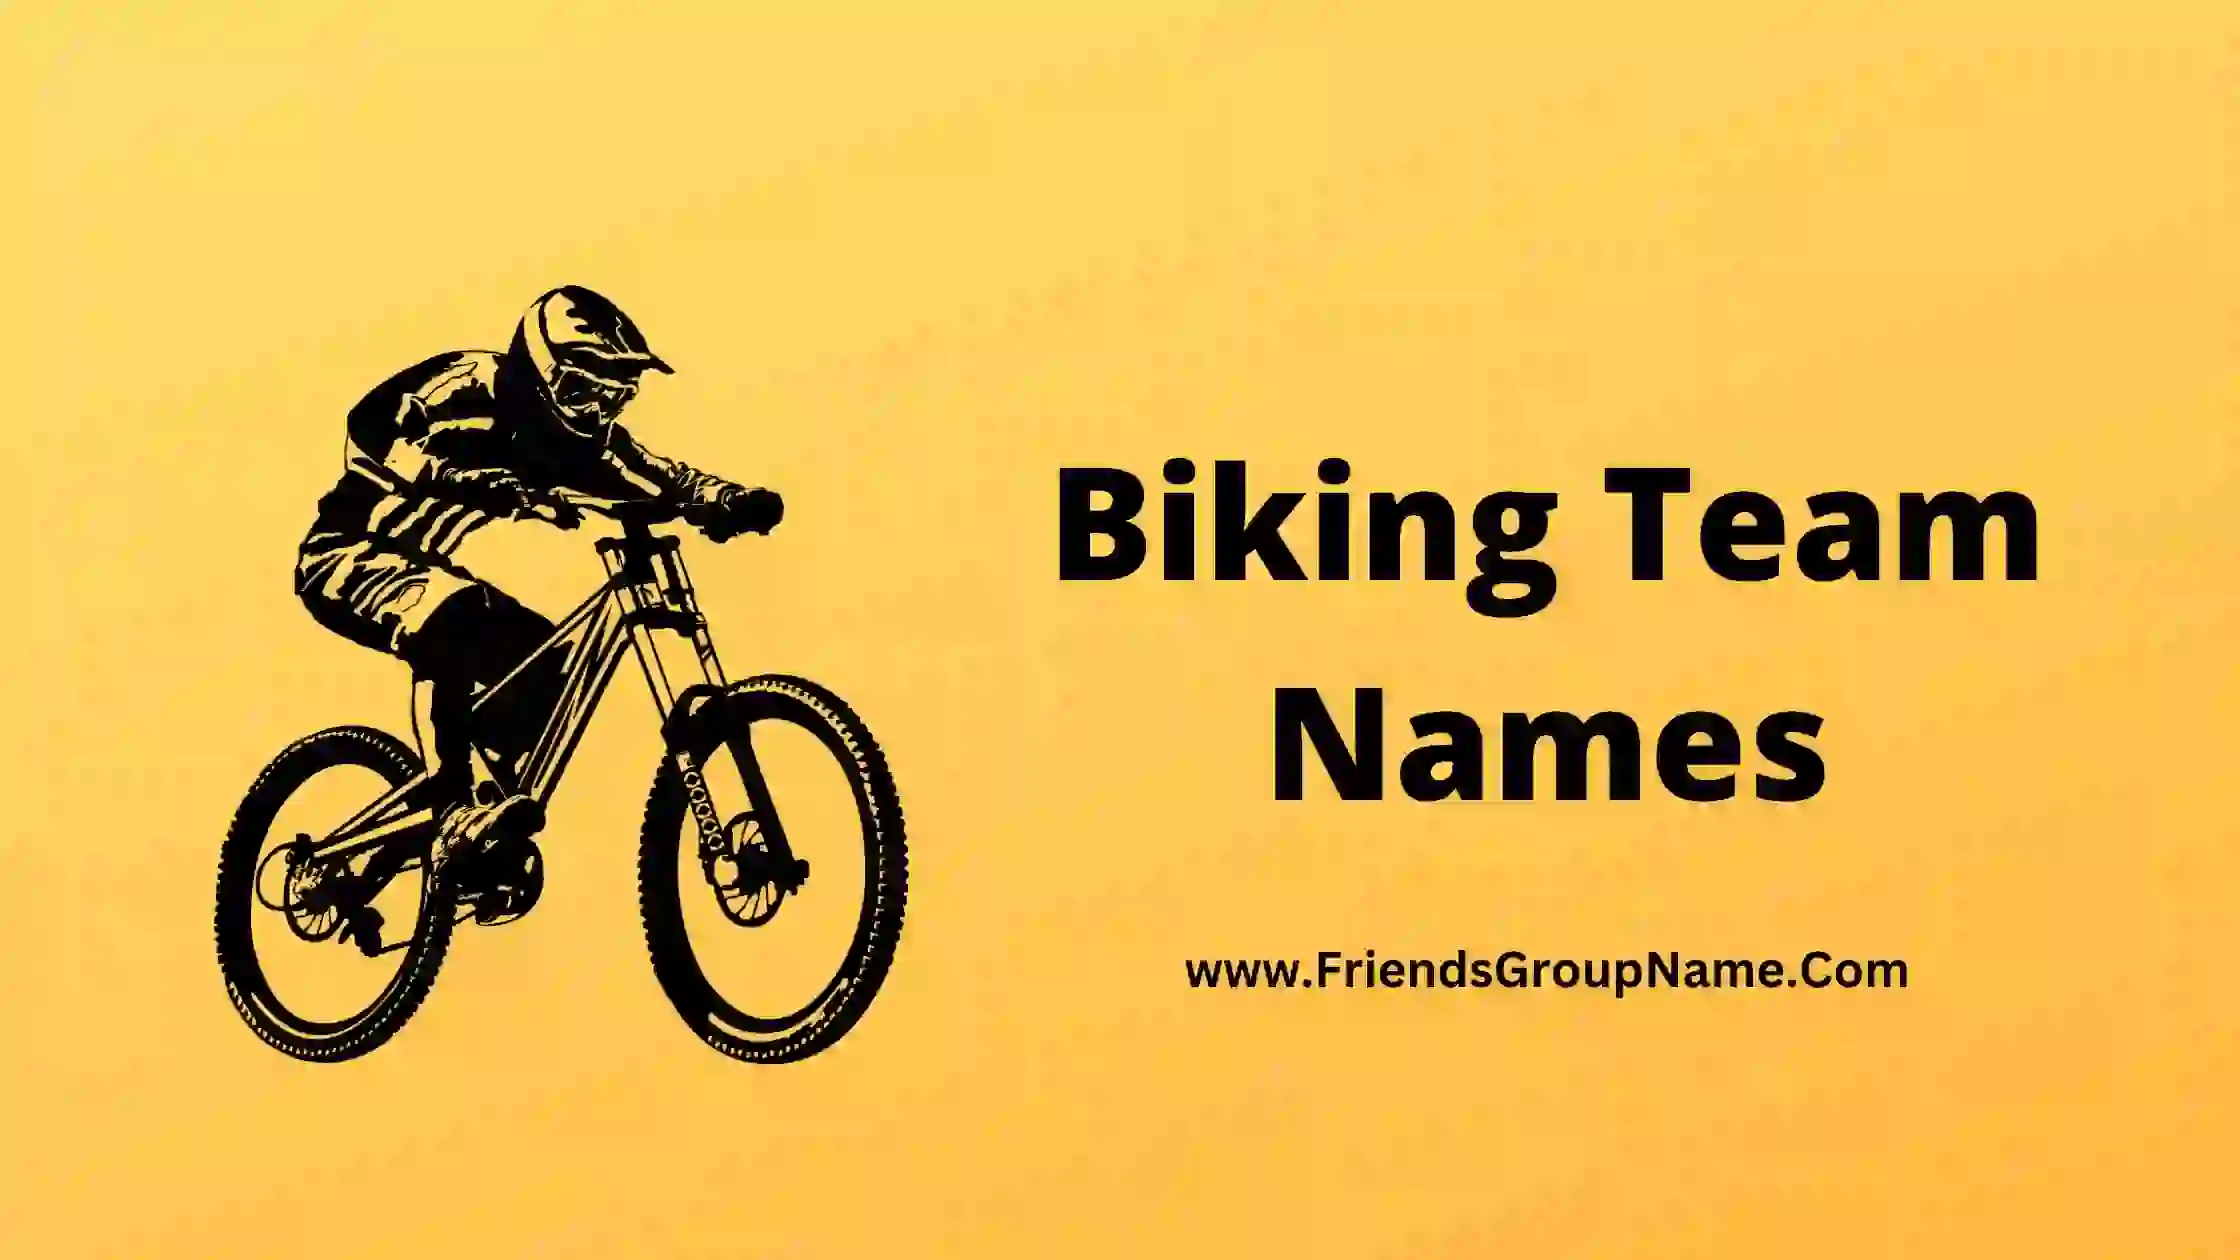 Biking Team Names